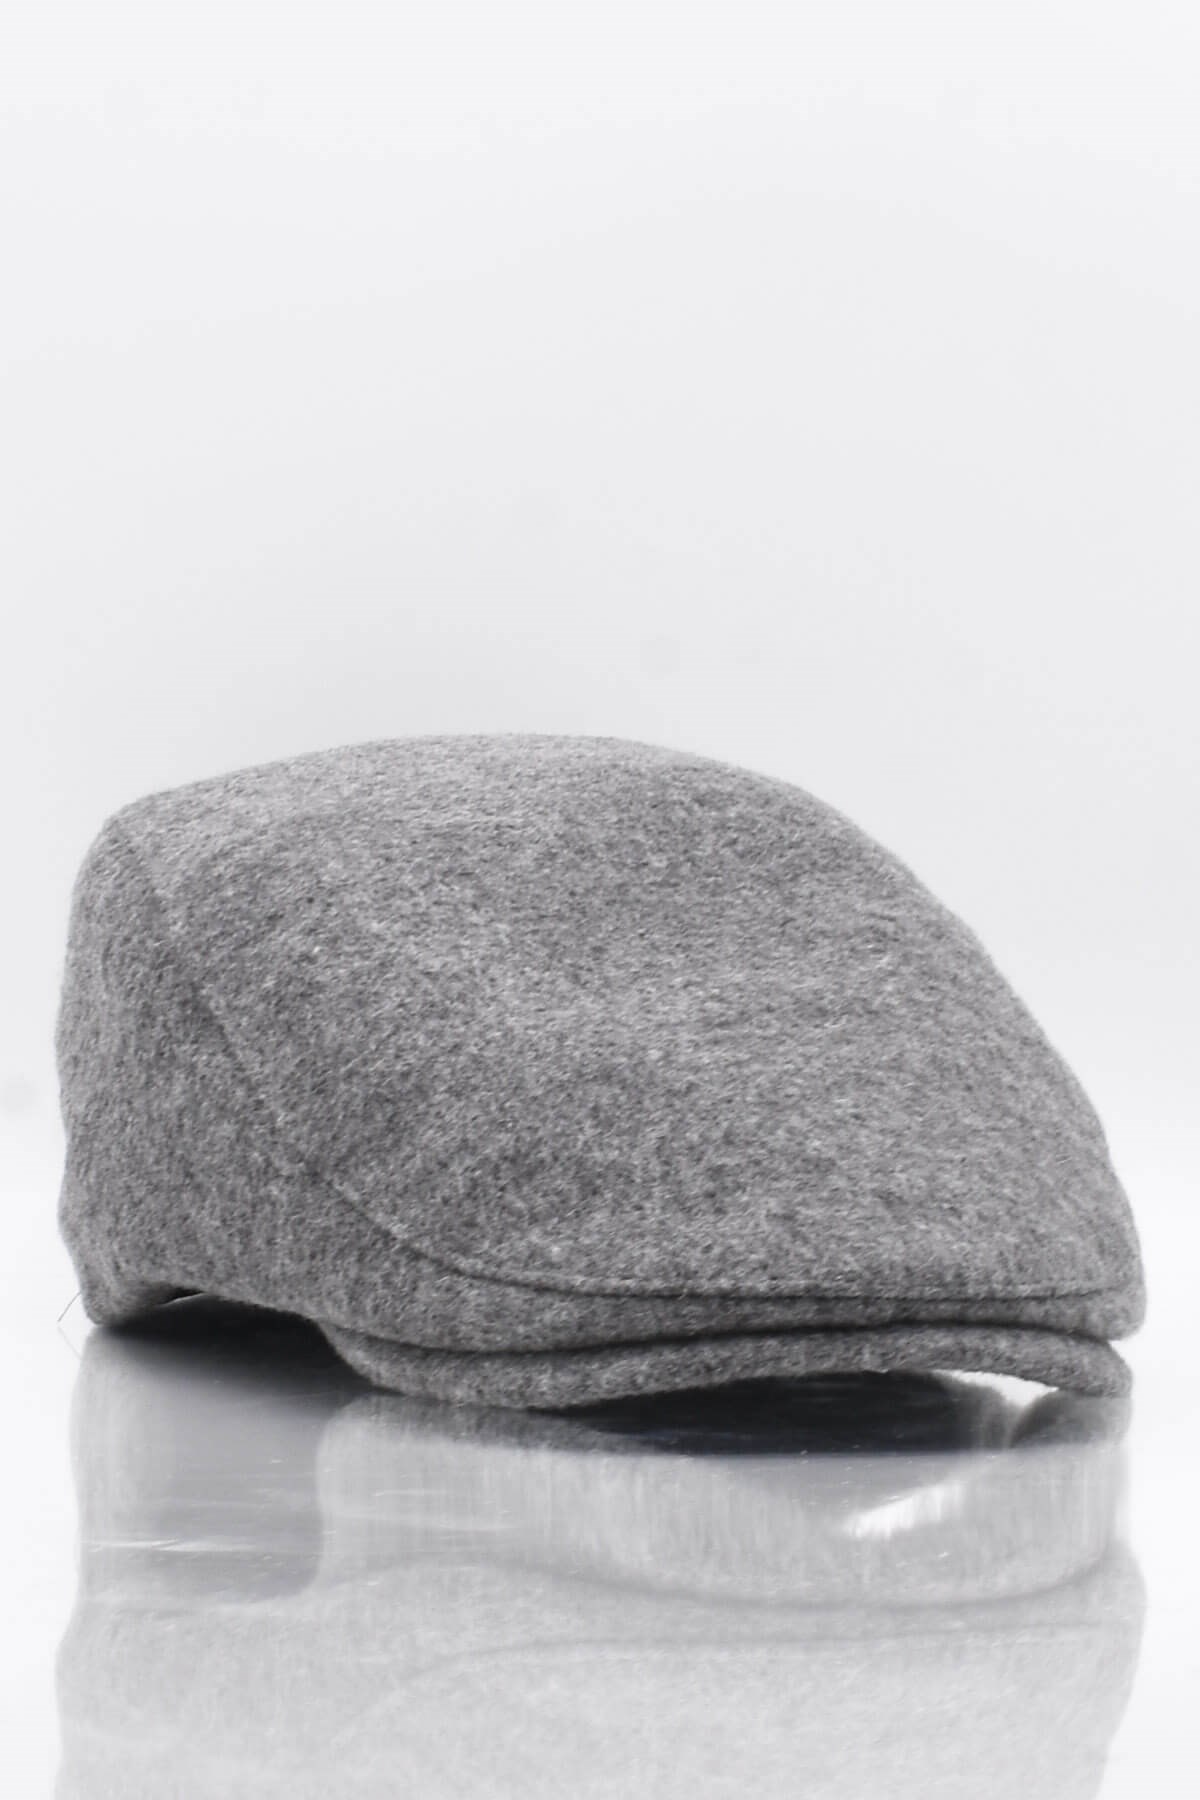 Külah Erkek Şapka Gri Kışlık Trend Flat Cap Yün Kasket KLH7050